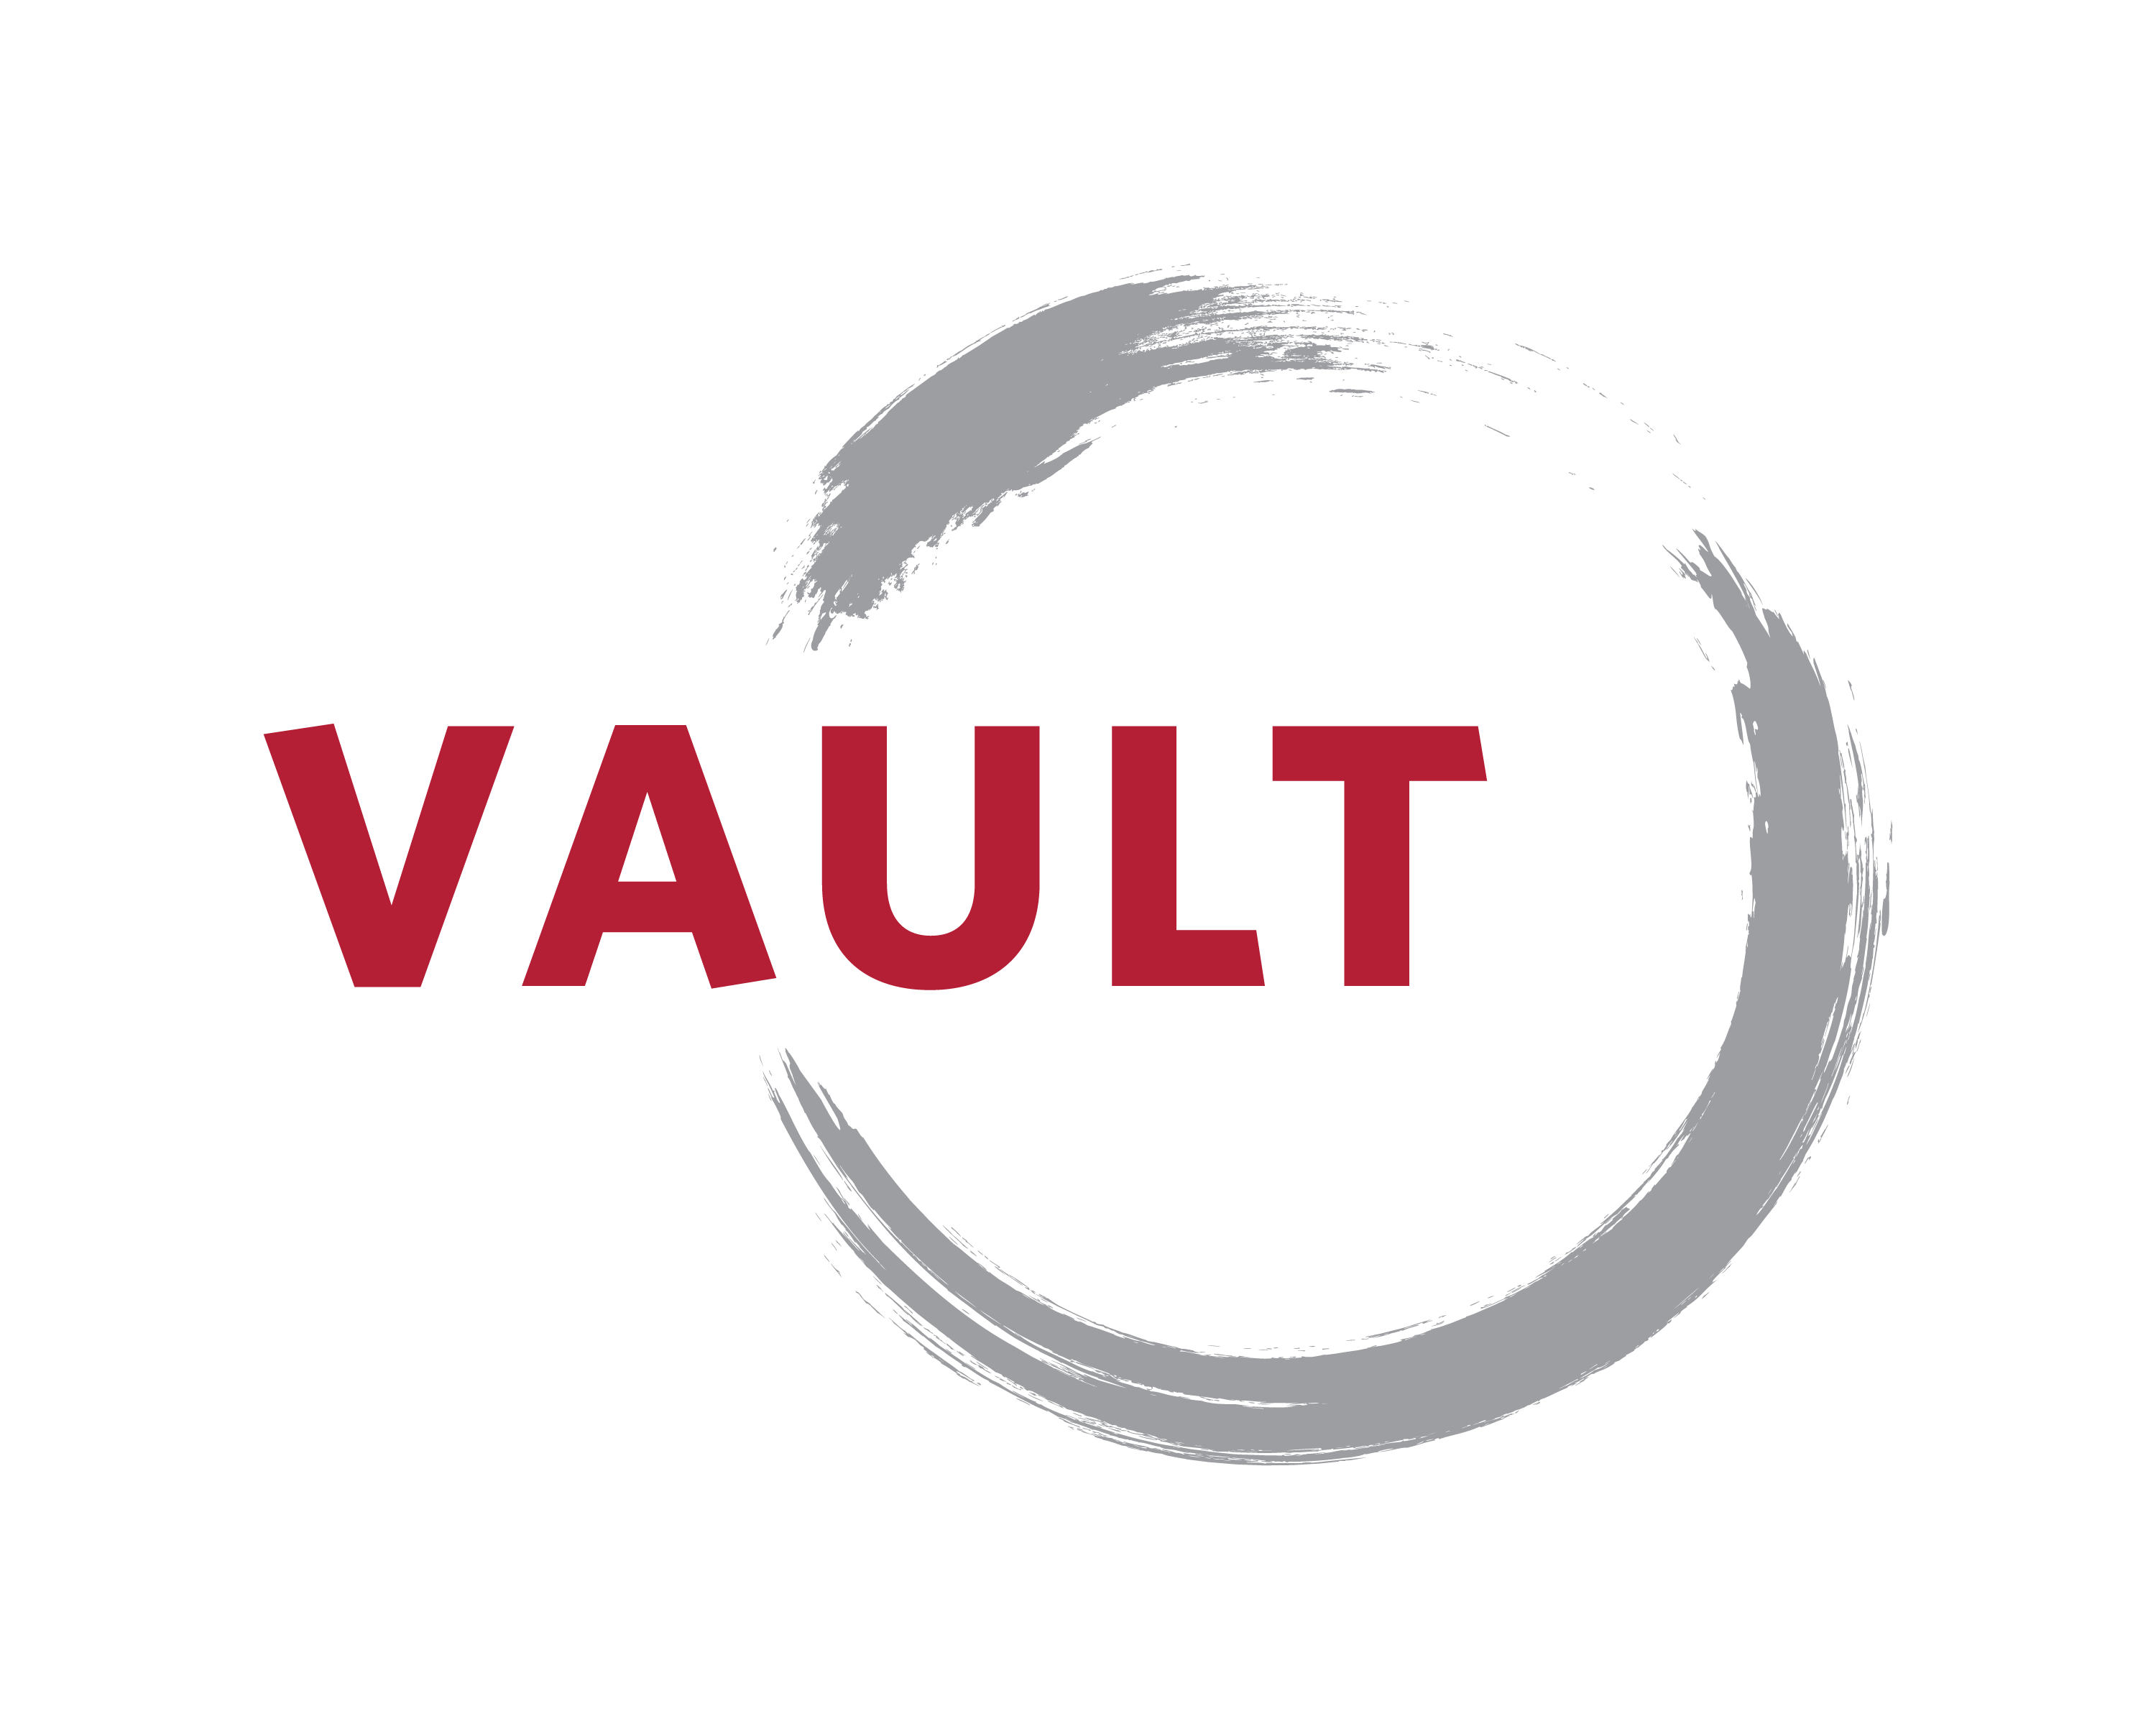 Vault insurance